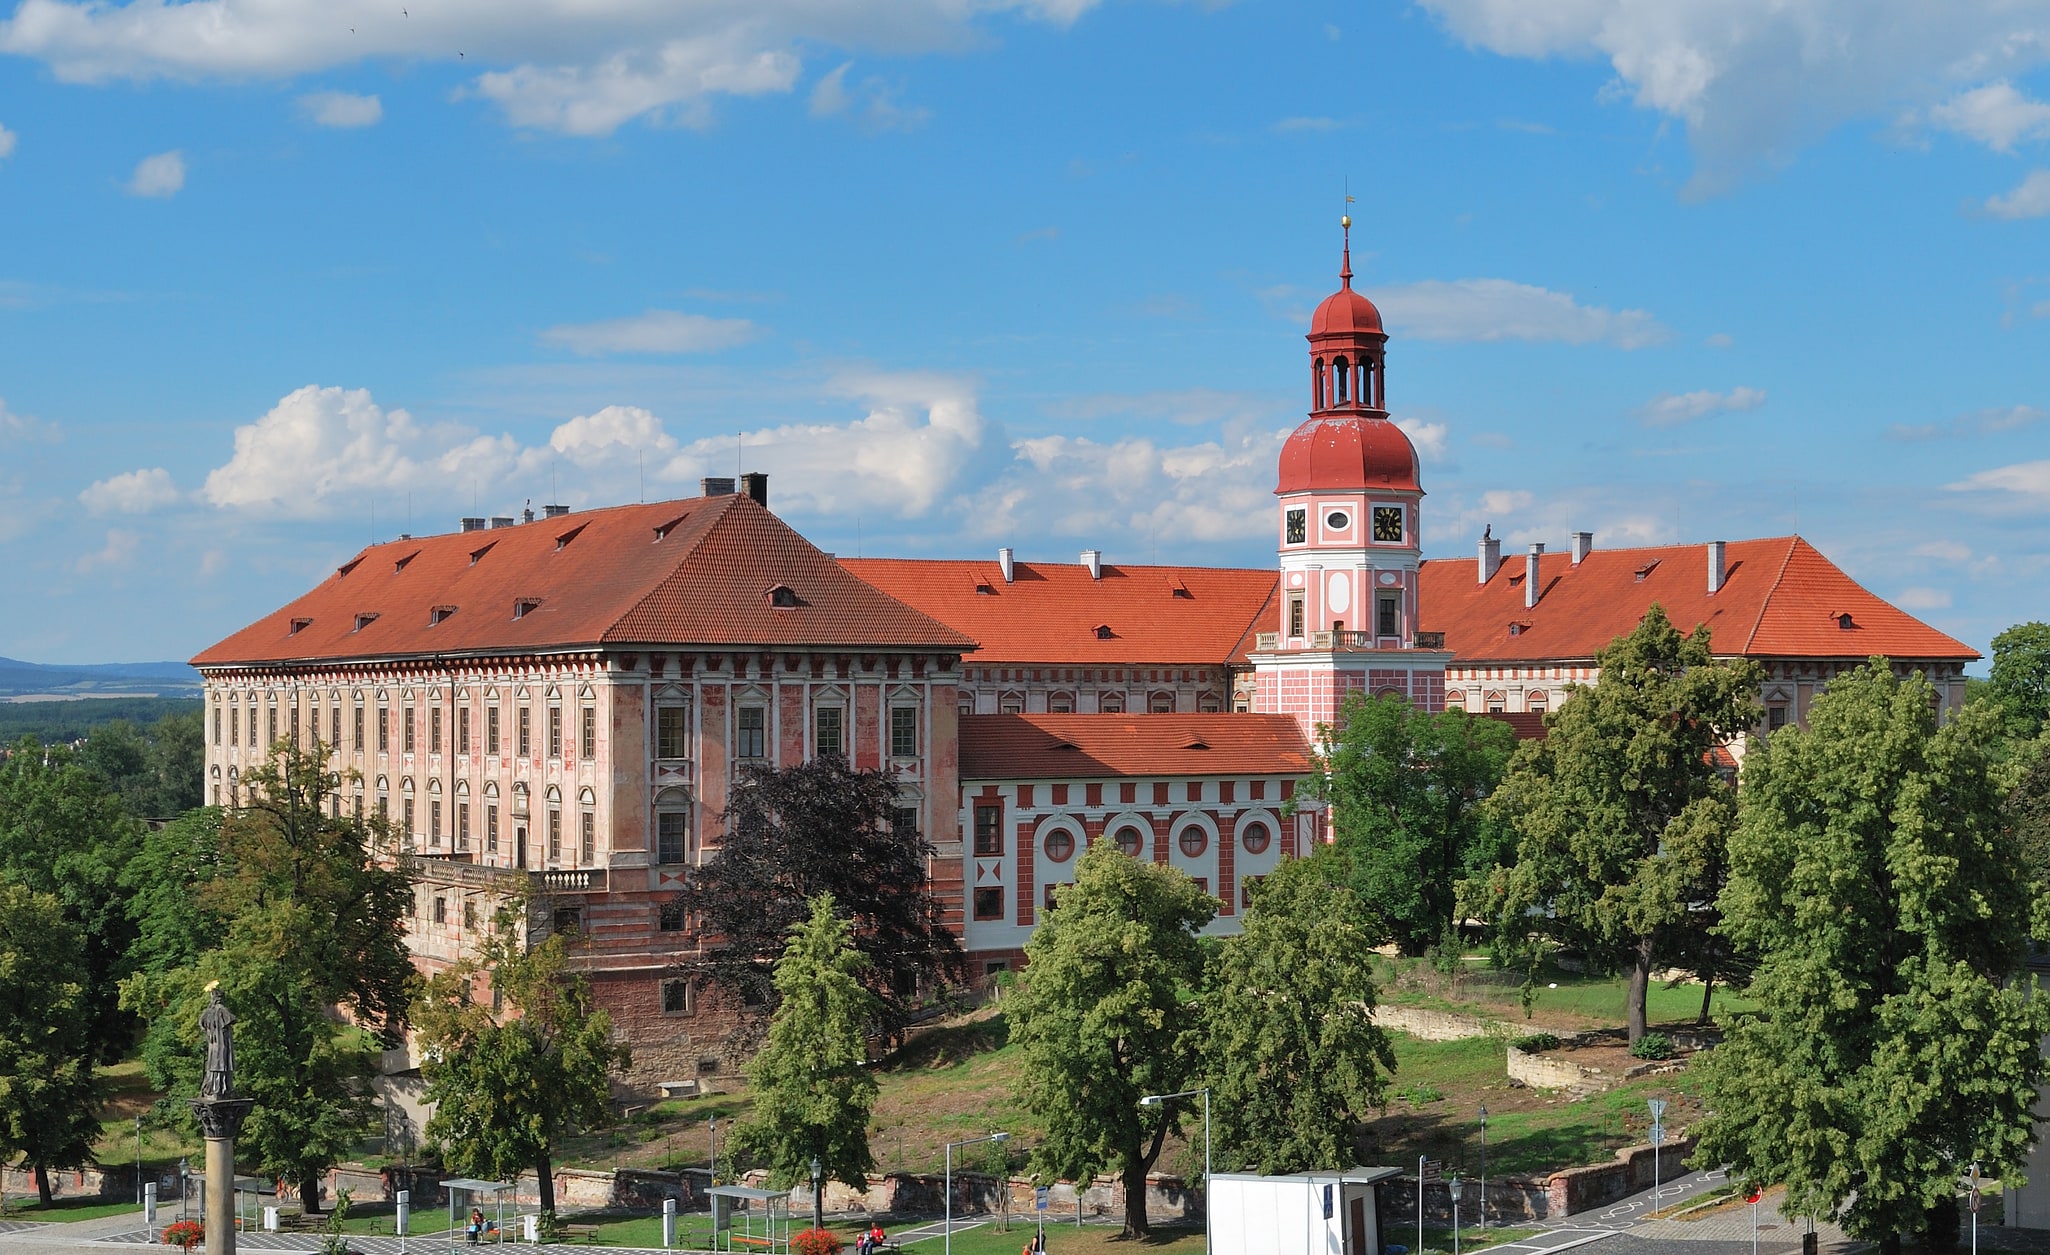 Roudnice nad Labem, Czech Republic